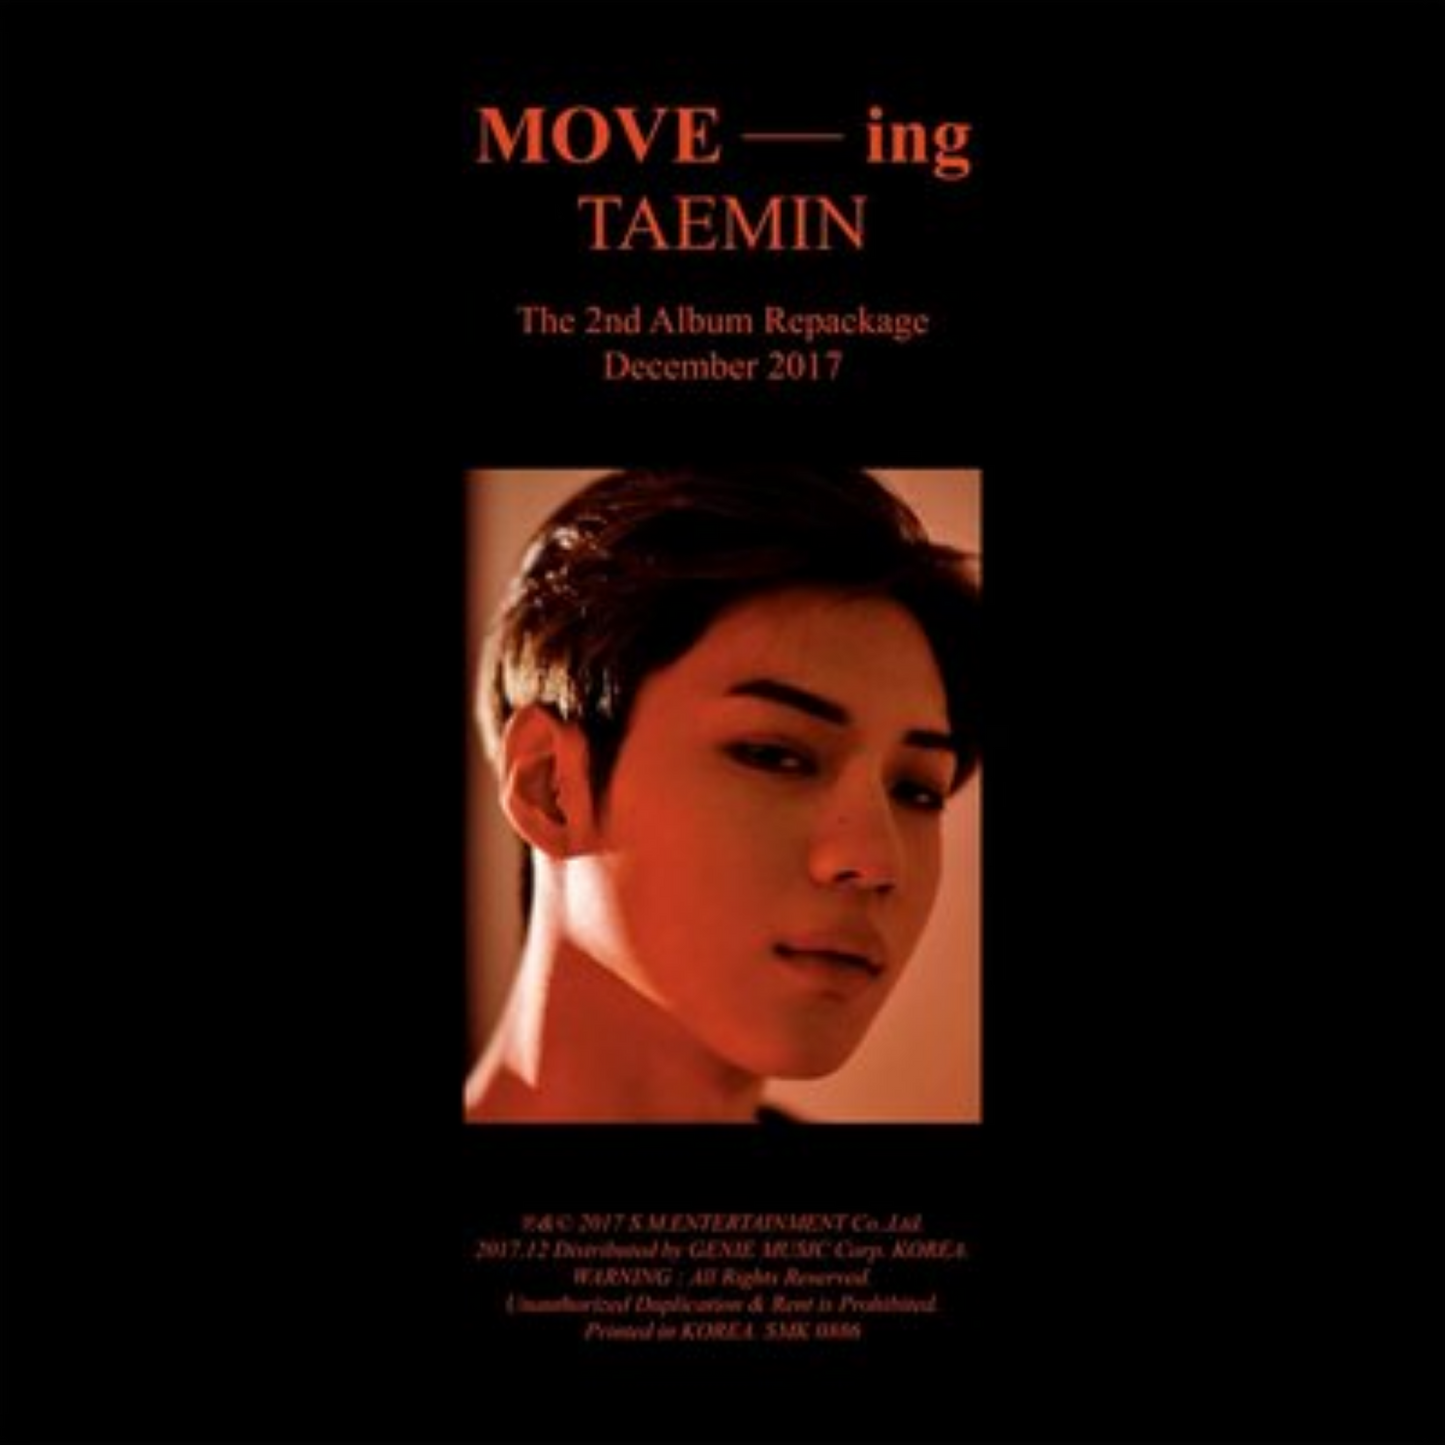 [ONE] SHINee - Taemin: Move-ing Repackaged